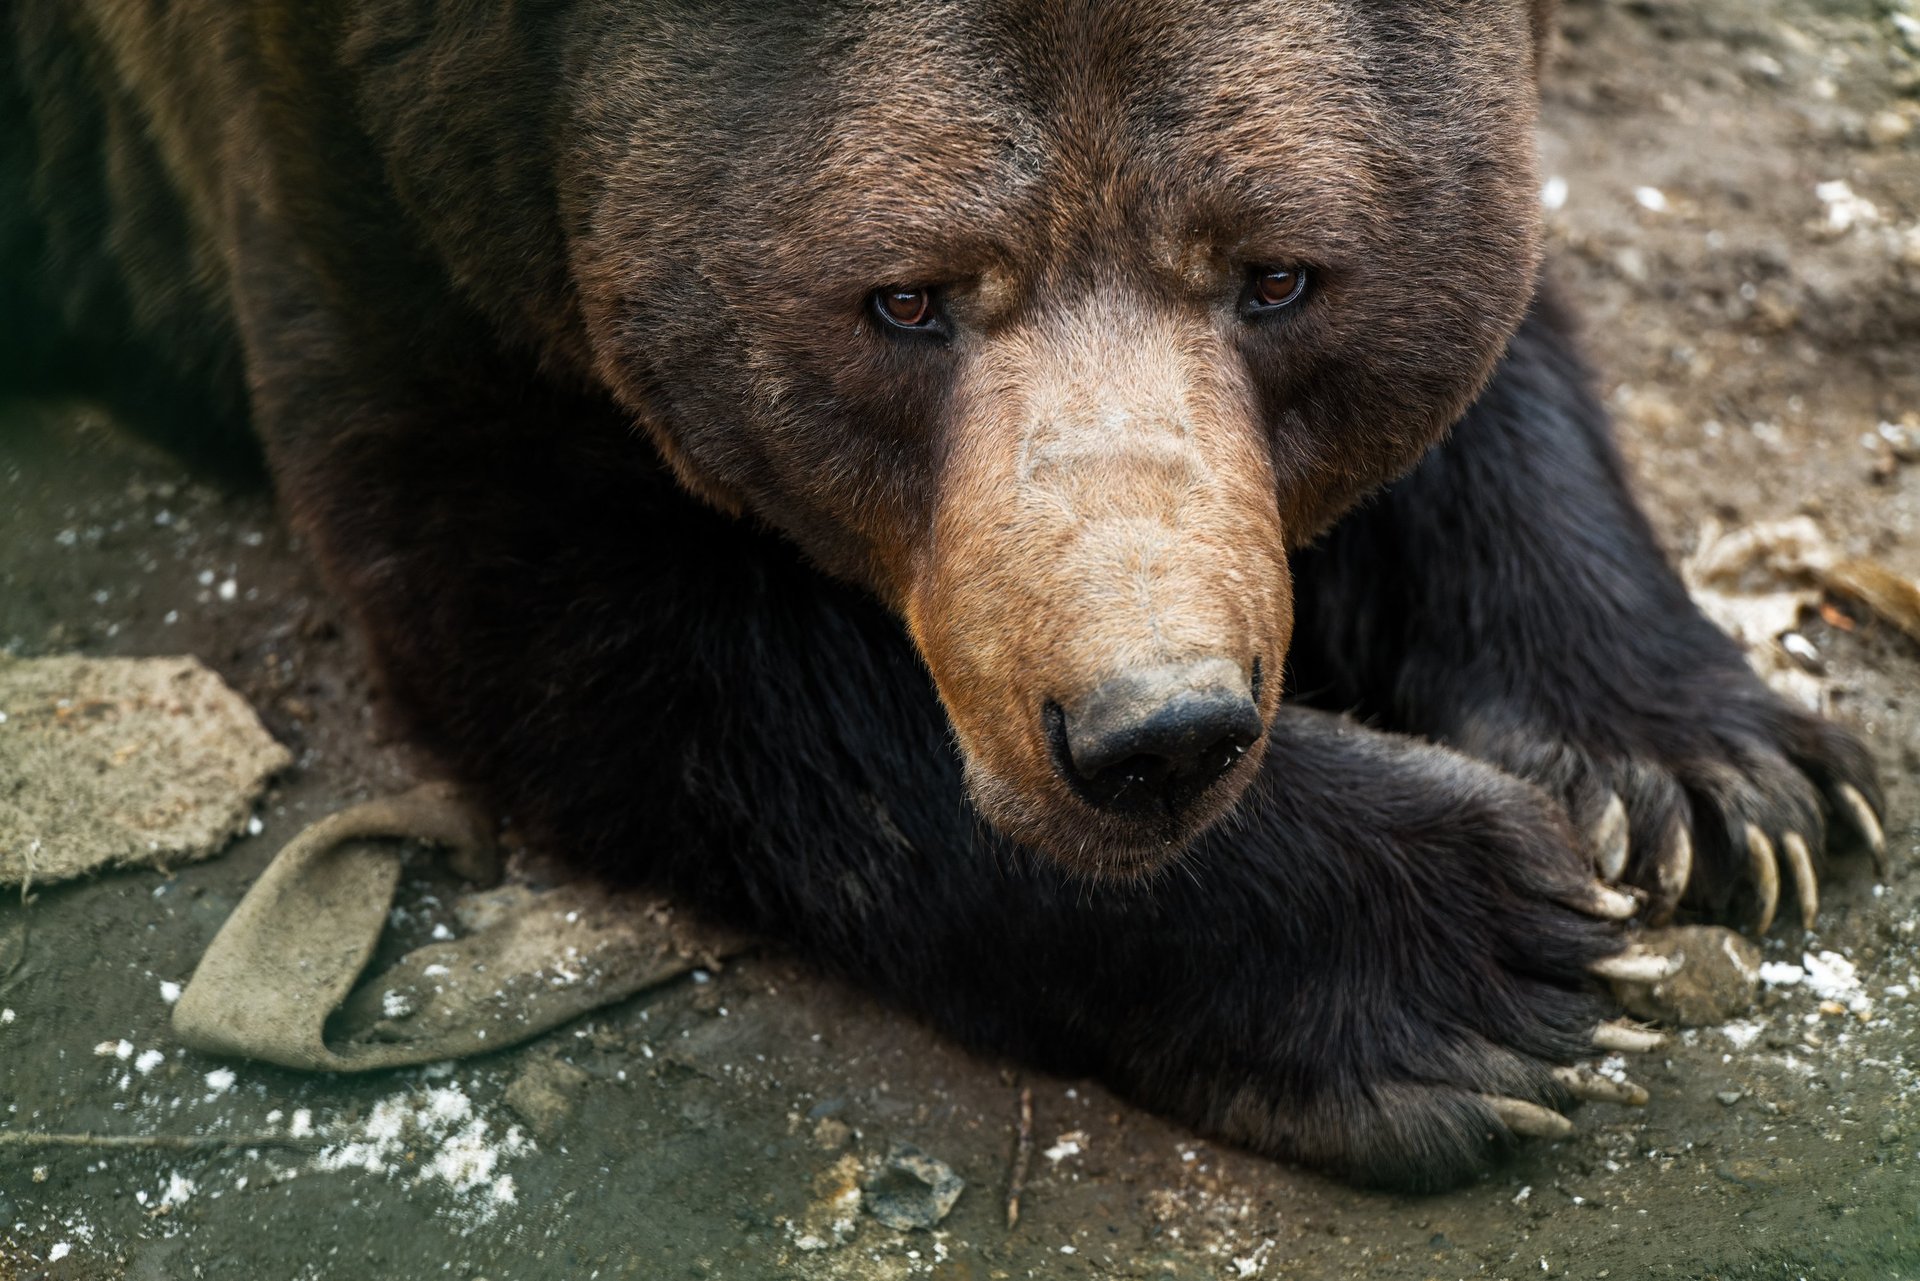 An up close photograph of an Asiatic black bear